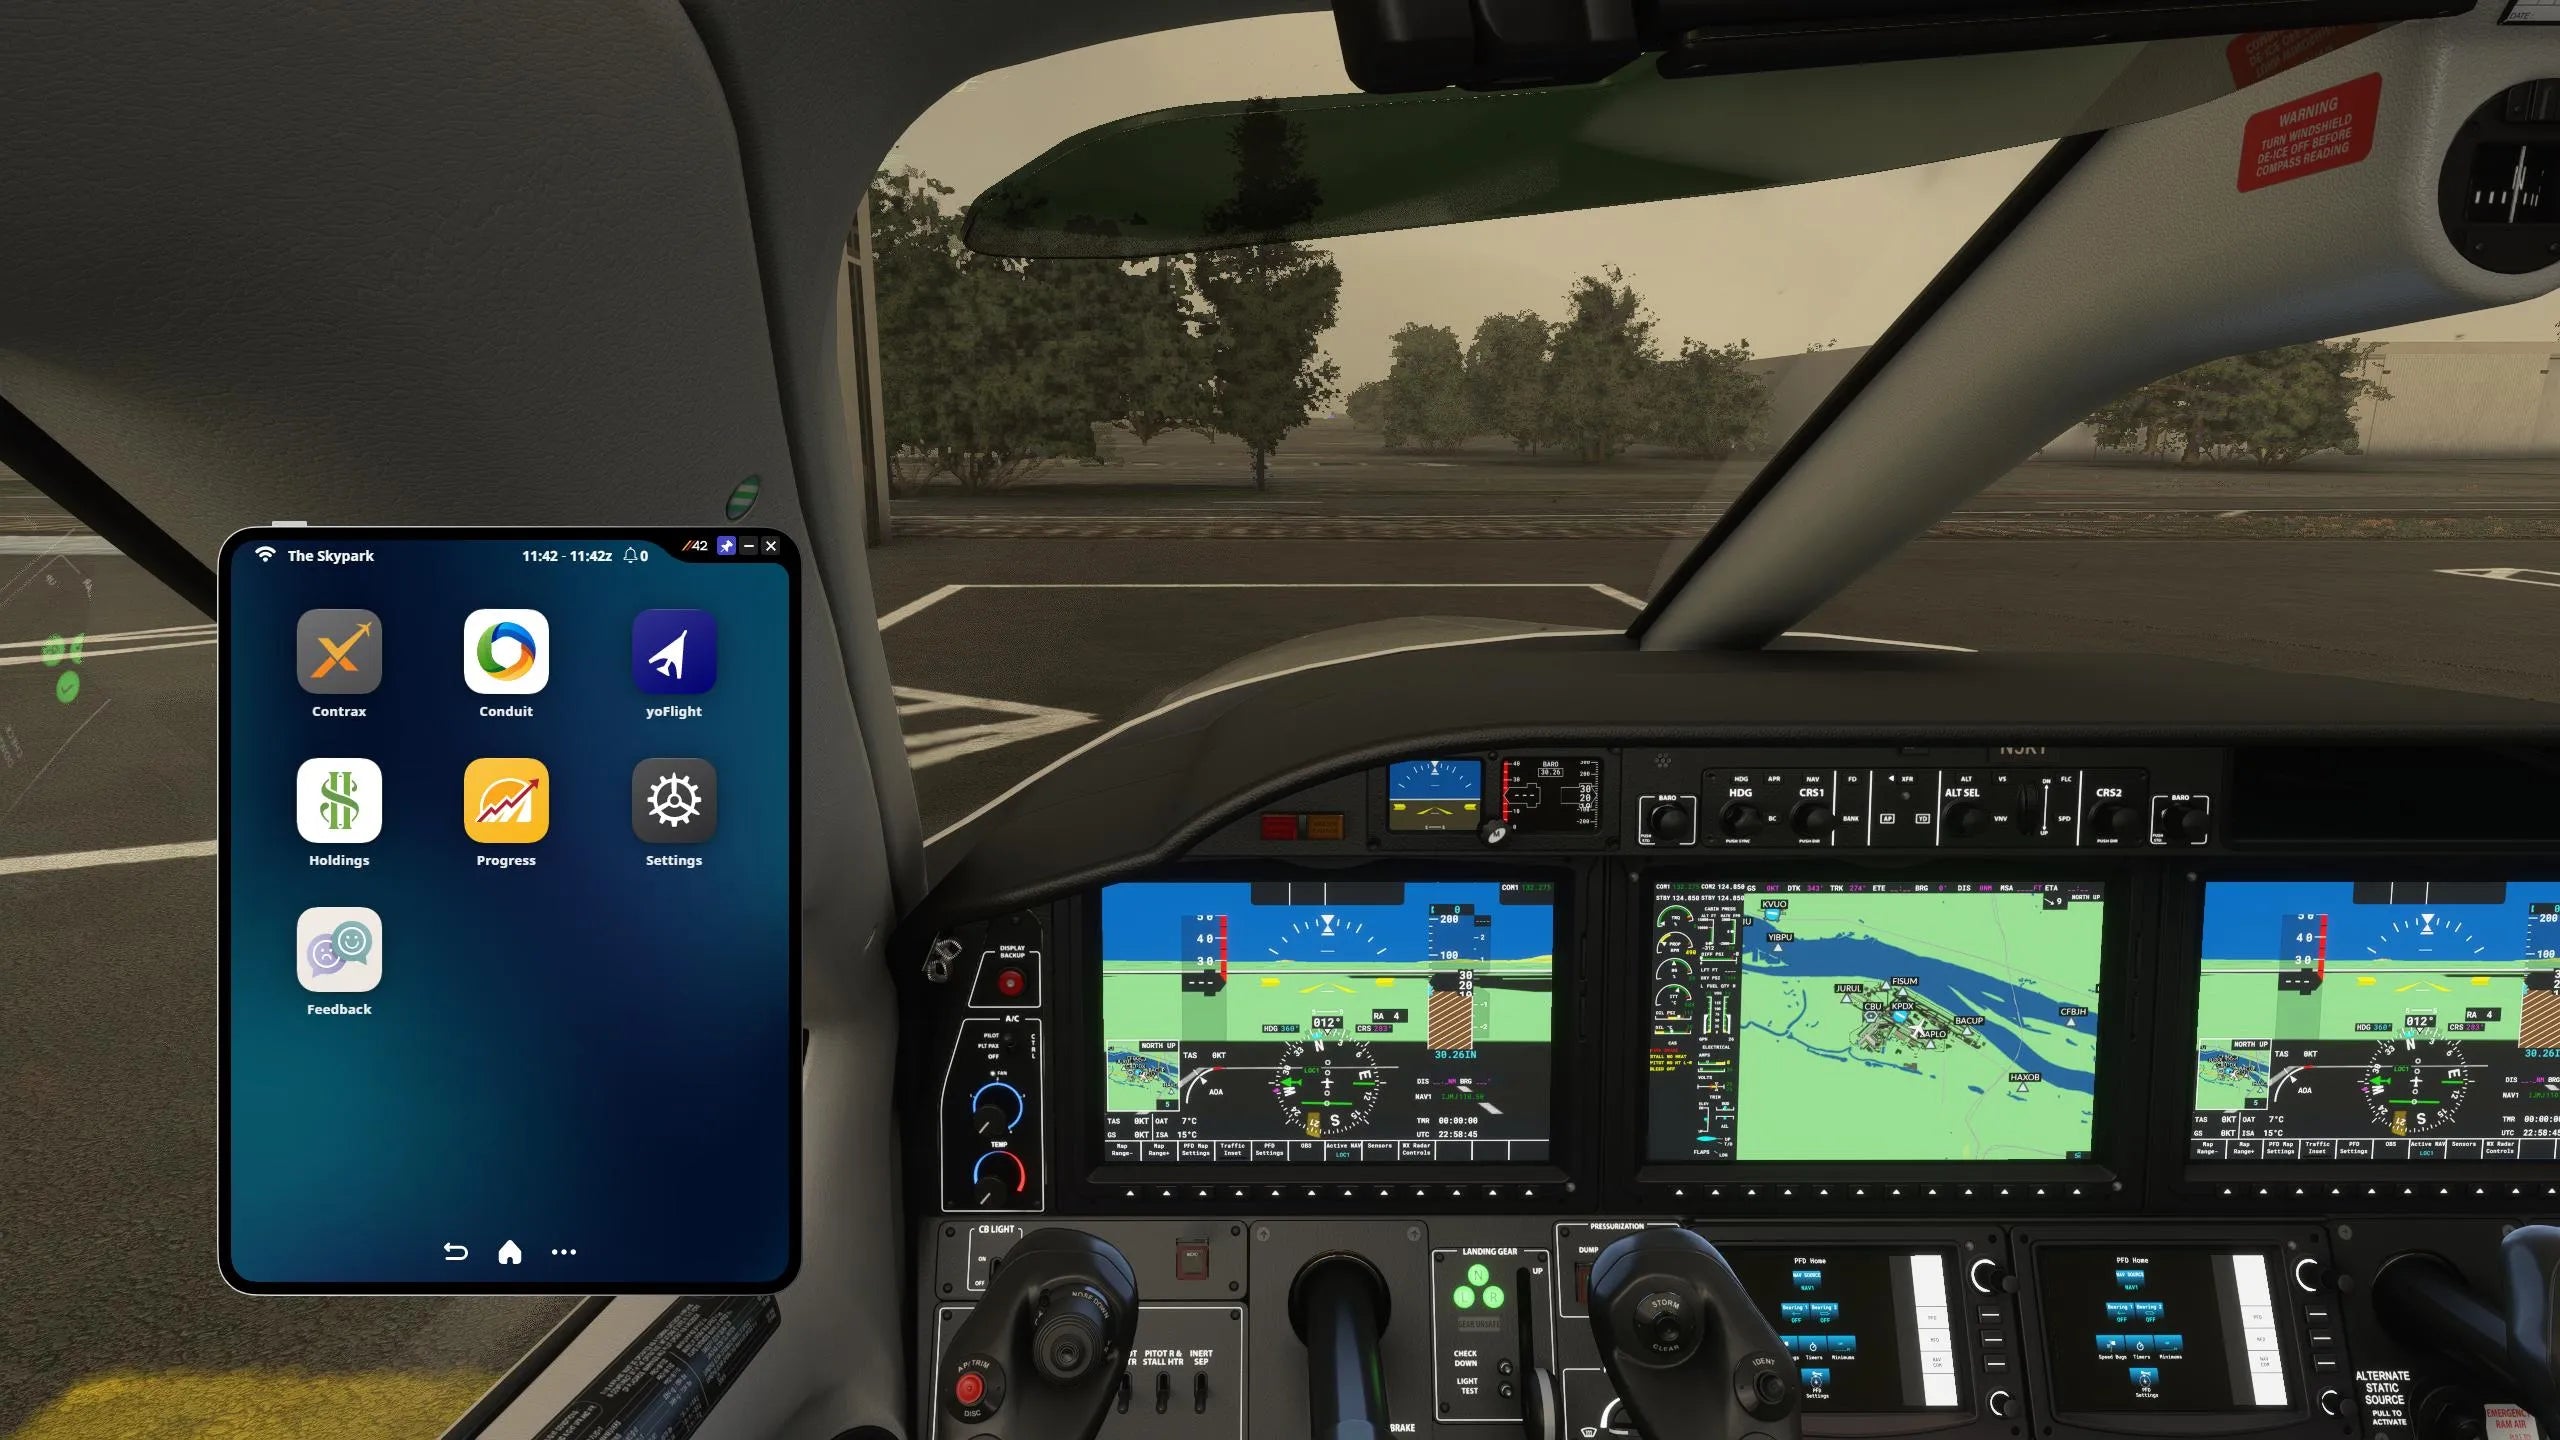 RELEASE: The Skypark has arrived for Microsoft Flight Simulator 2020!